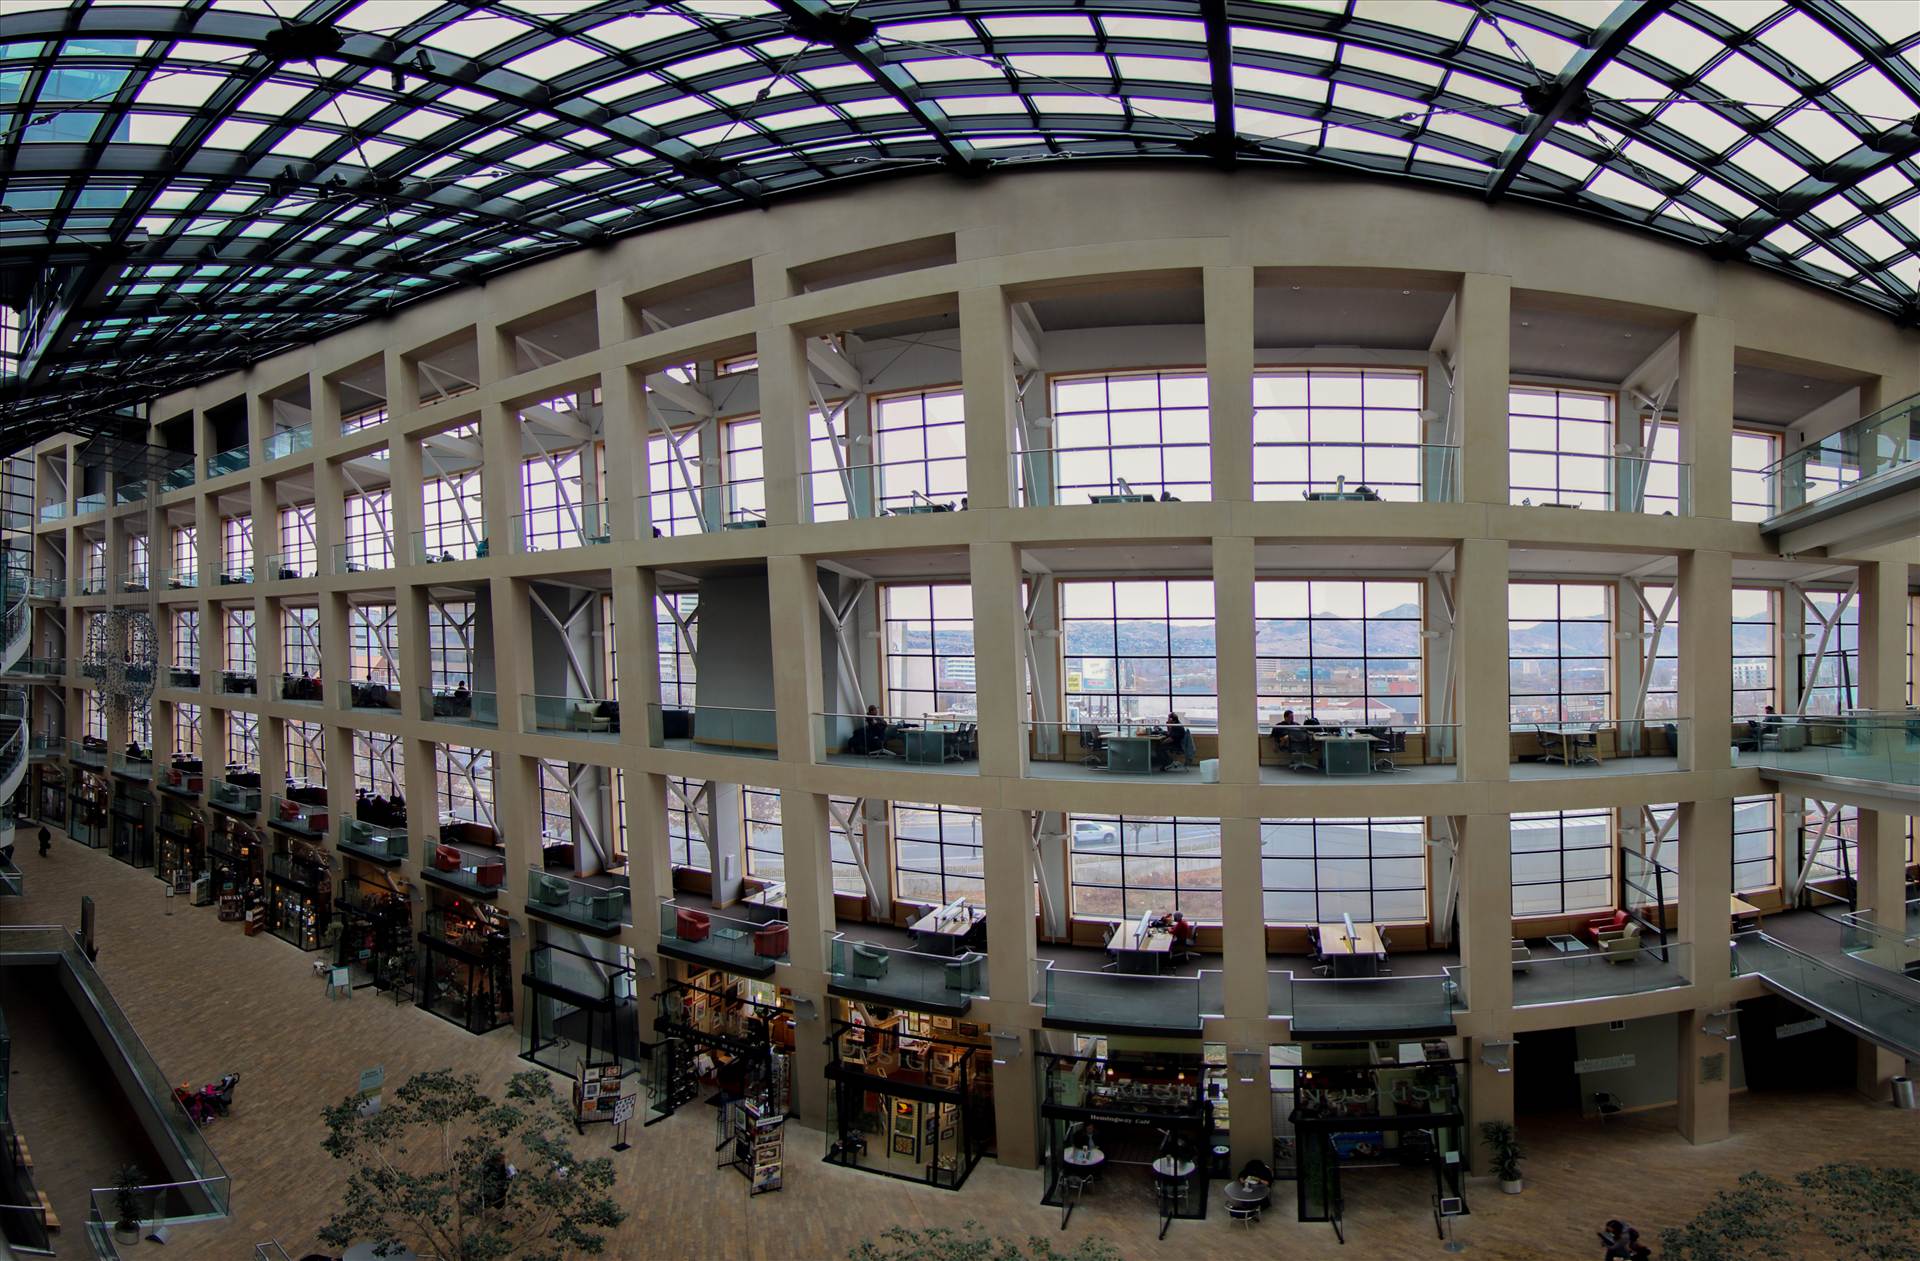 Salt Lake City Library Panorama  by David Verschueren